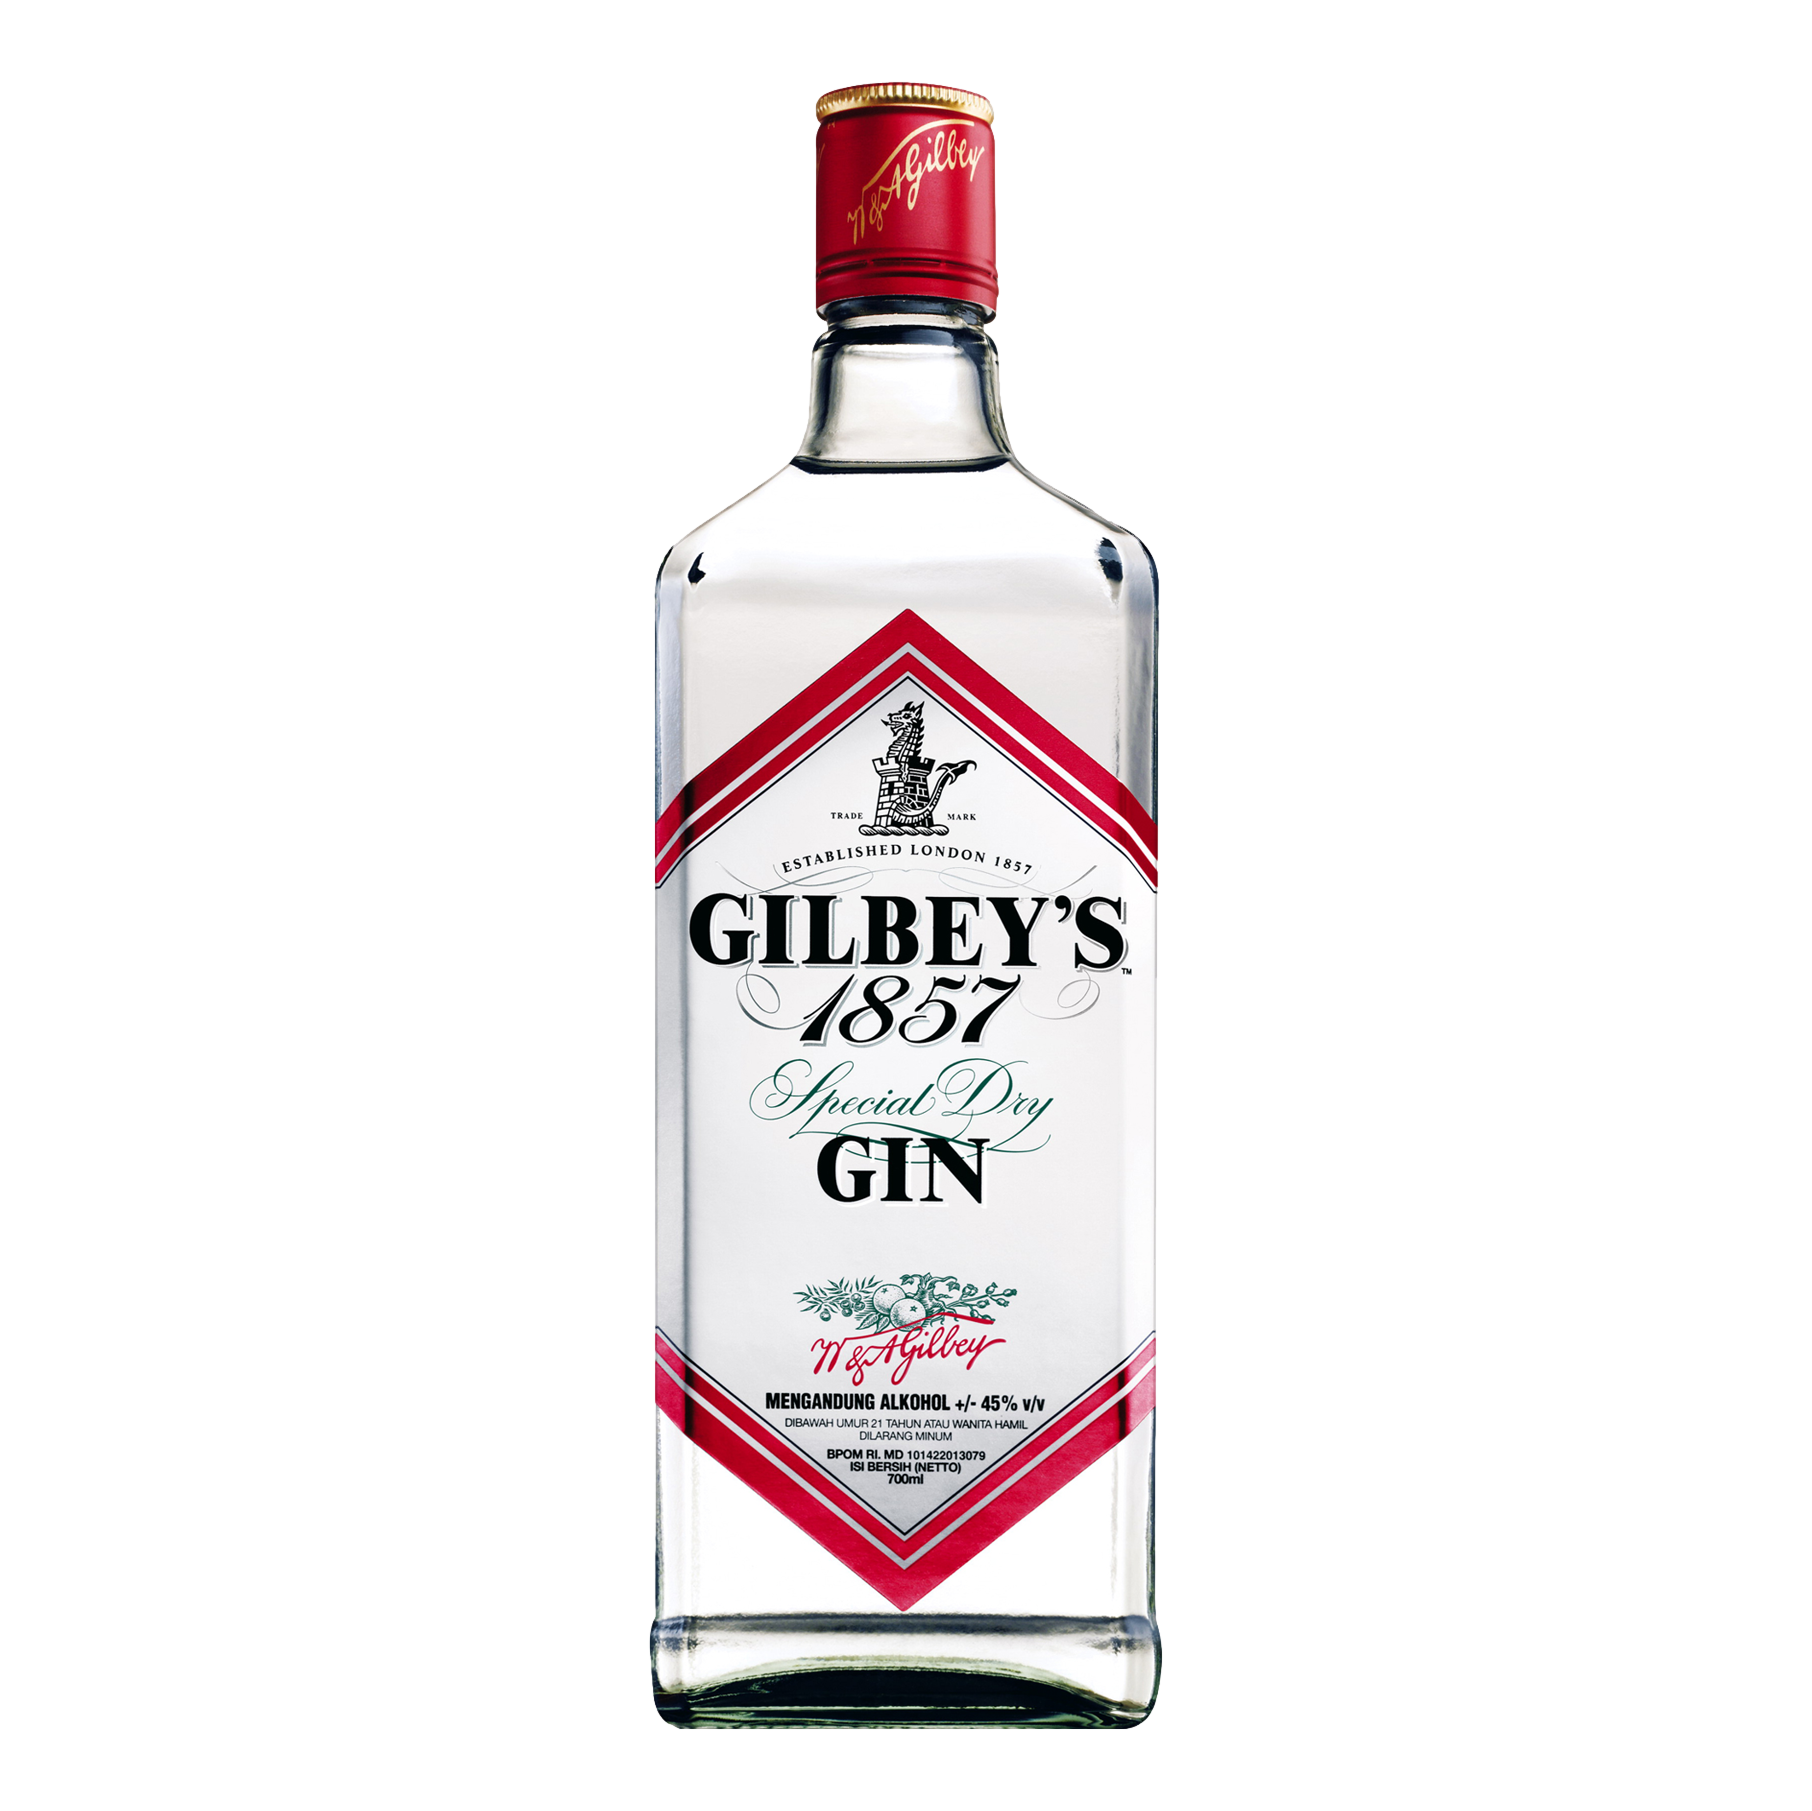 Gilbey's Gin 700ml